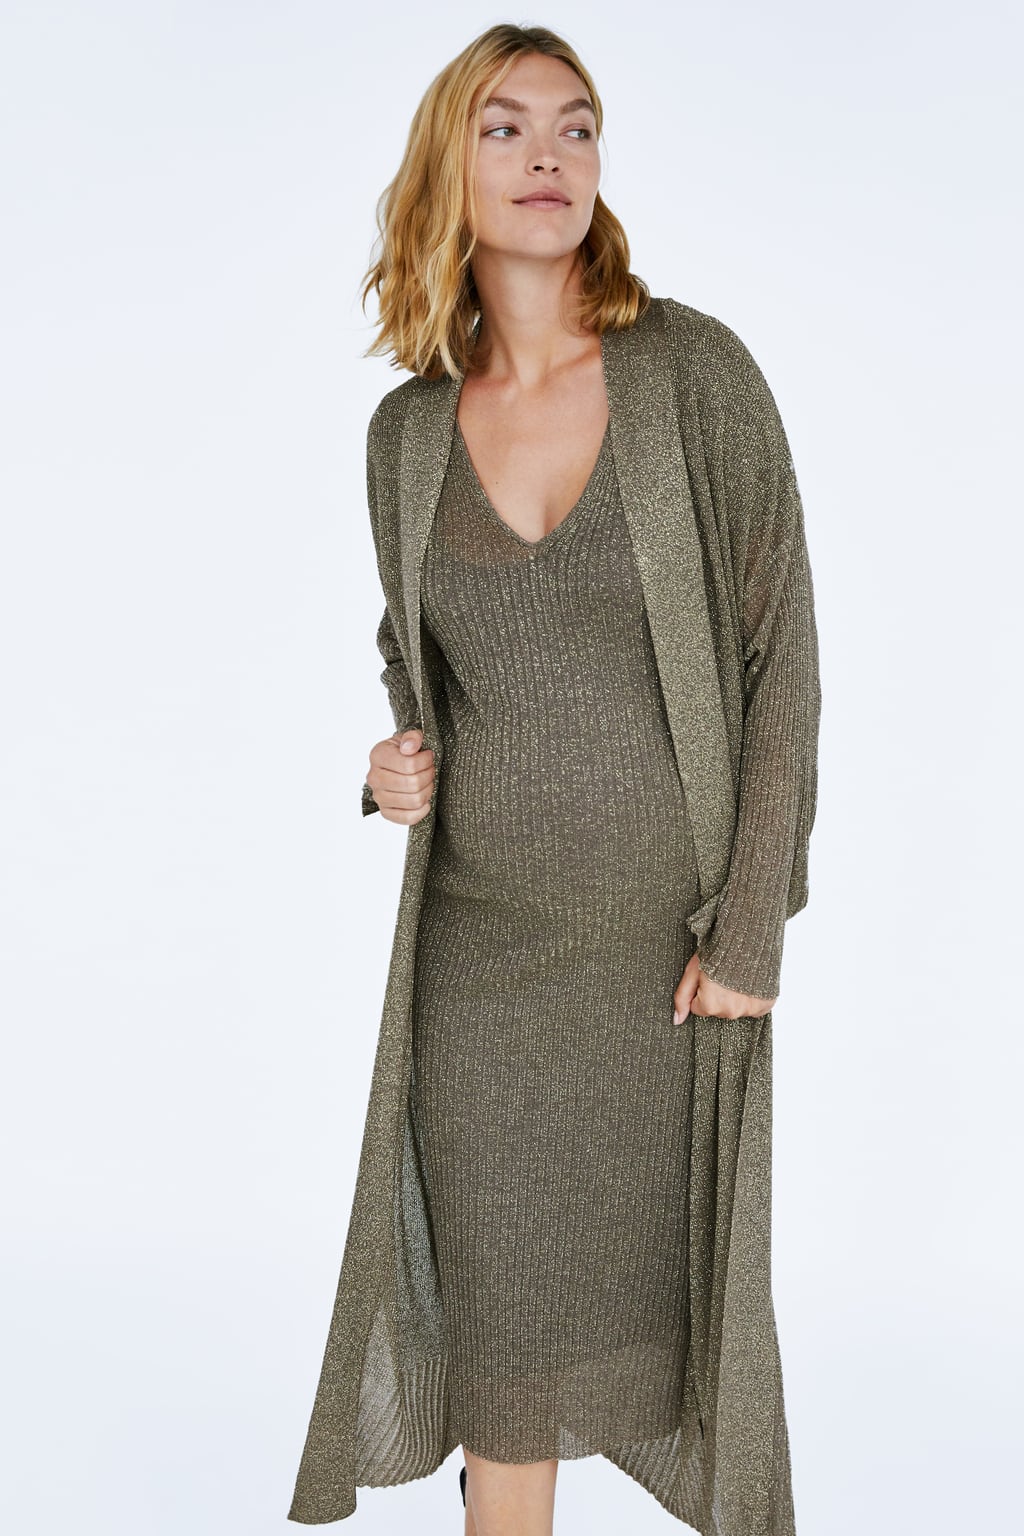 Zara maternity wear